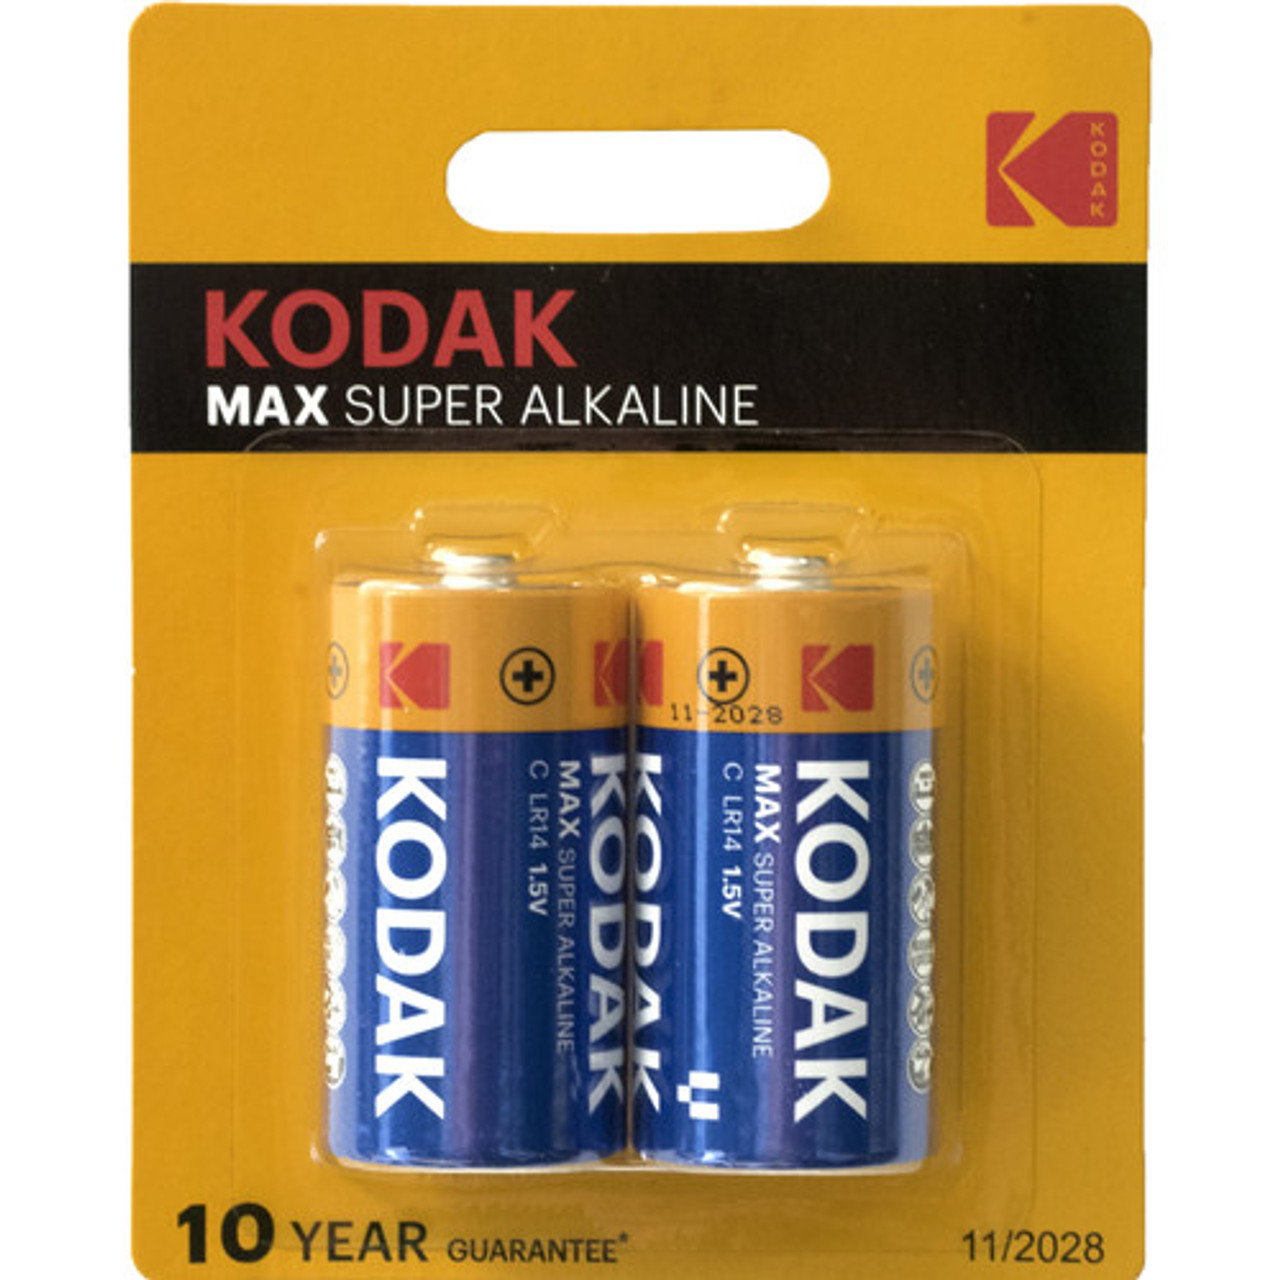 2x Piles Rechargeables Kodak AAA